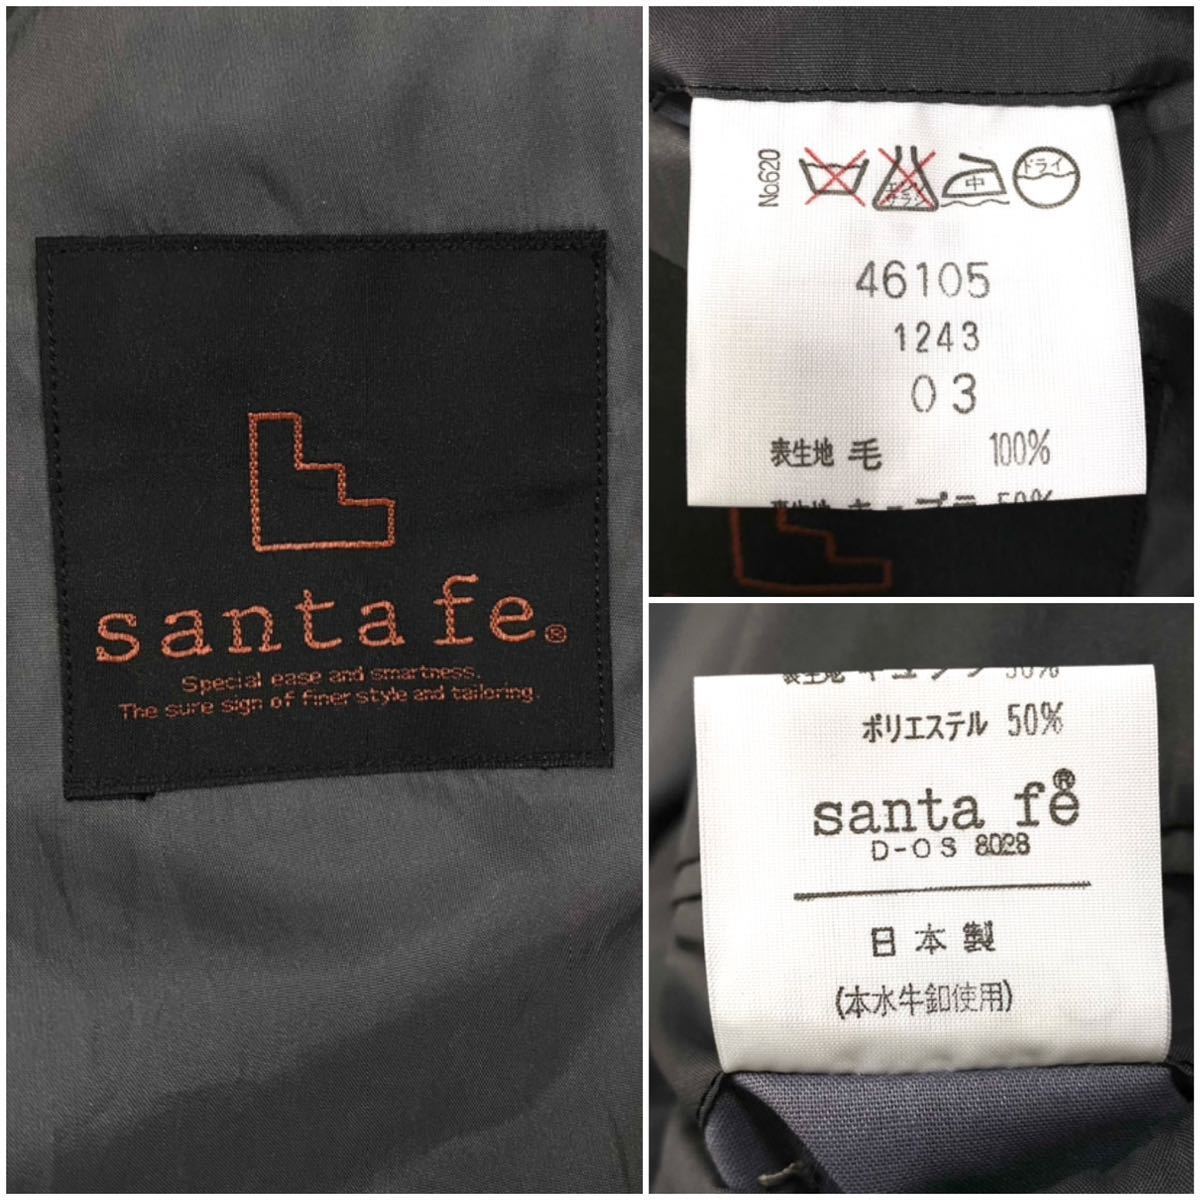 santafe(サンタフェ)テーラードジャケット 上着 メンズ03 バーガンディー系_画像2